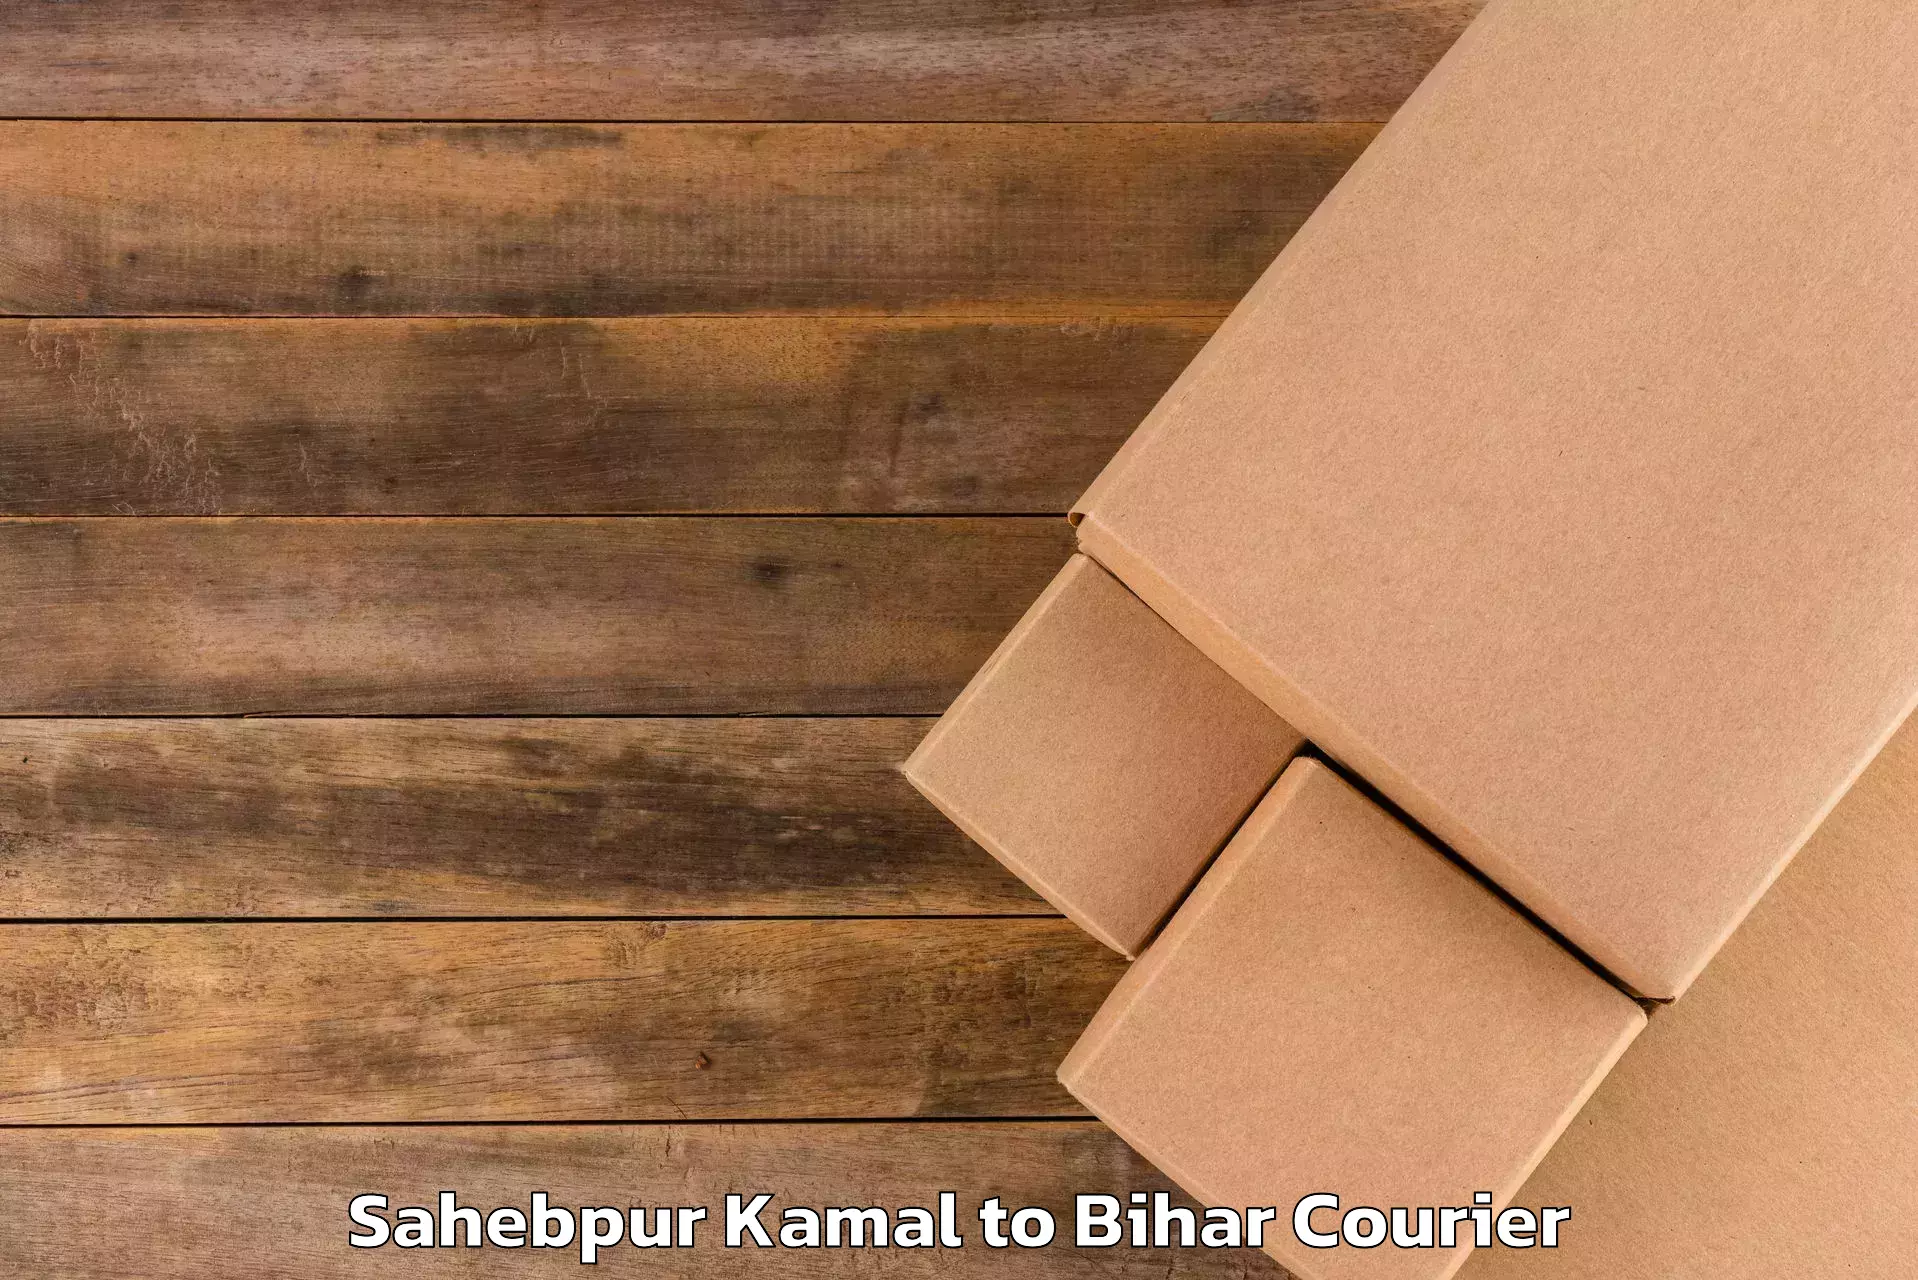 Luggage transport consultancy Sahebpur Kamal to Bihar